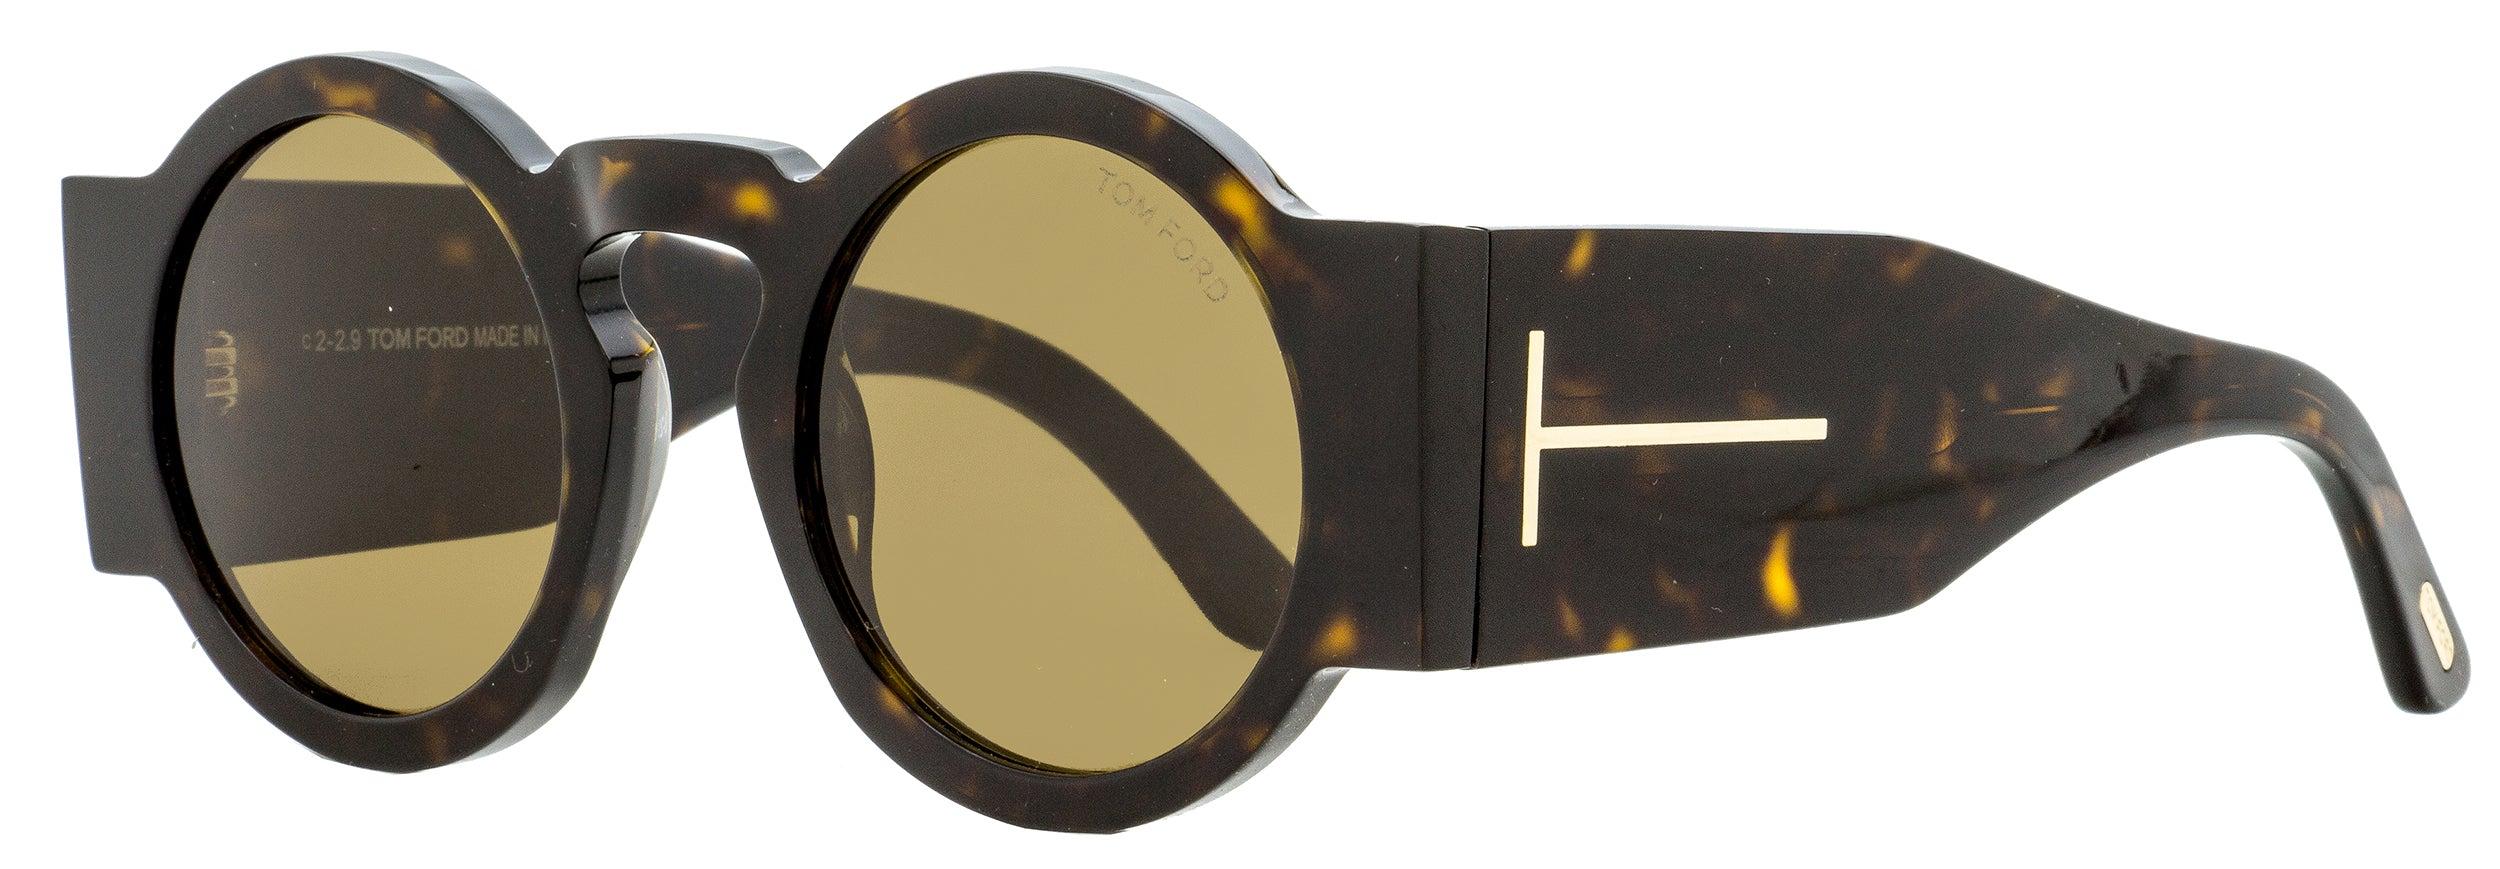 Tom Ford Round Sunglasses Tf603 Tatiana-02 Havana 47mm in Black | Lyst